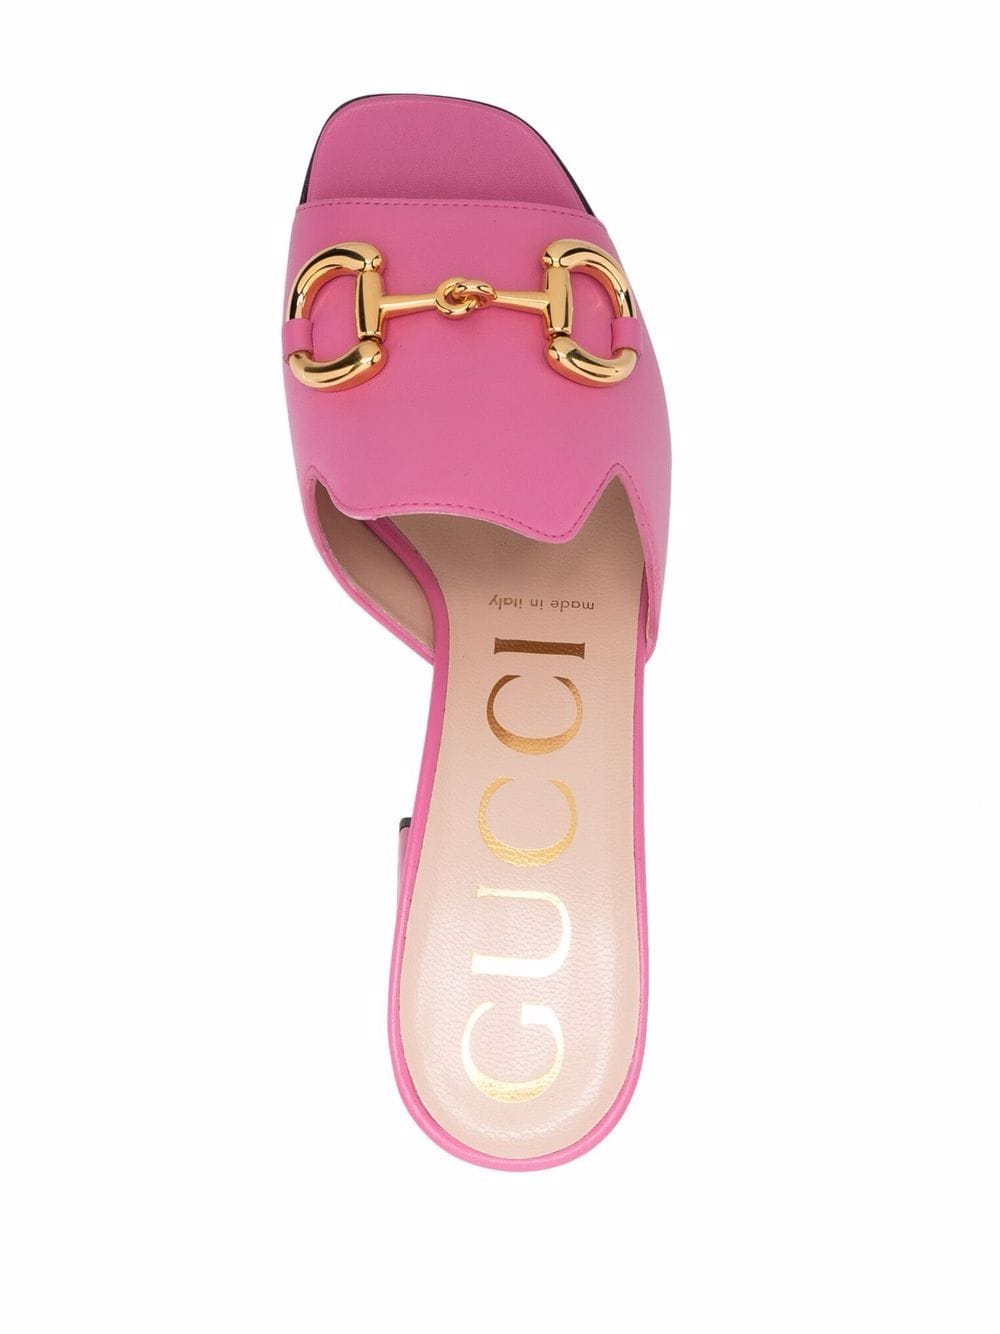 Gucci Horsebit Mule Sandals